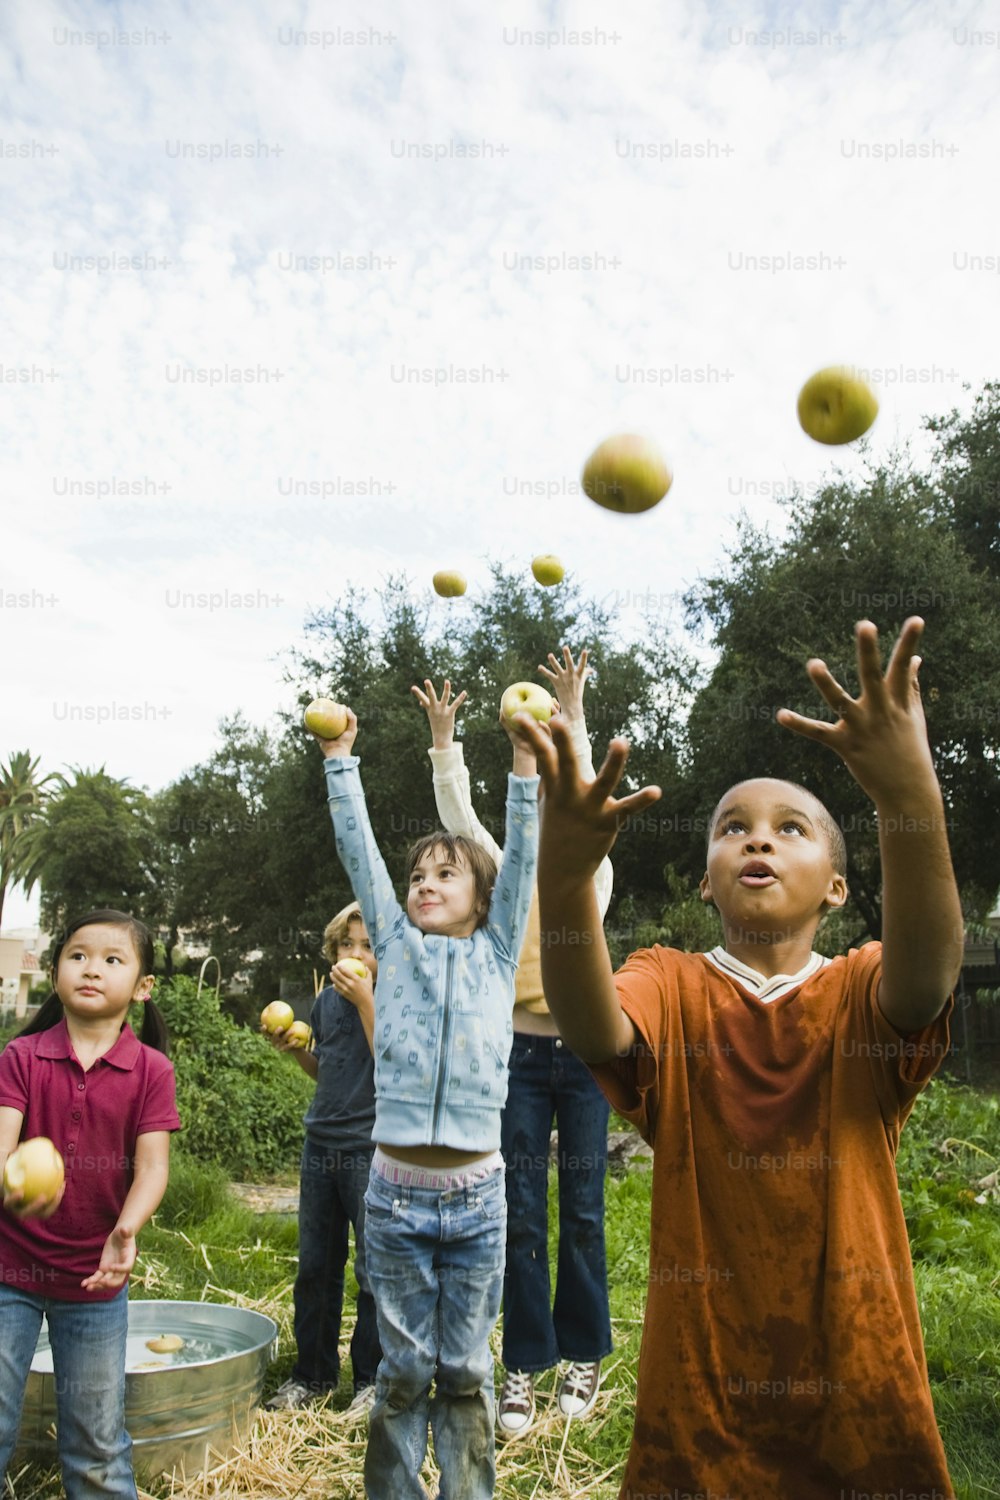 Un gruppo di bambini lancia mele in aria